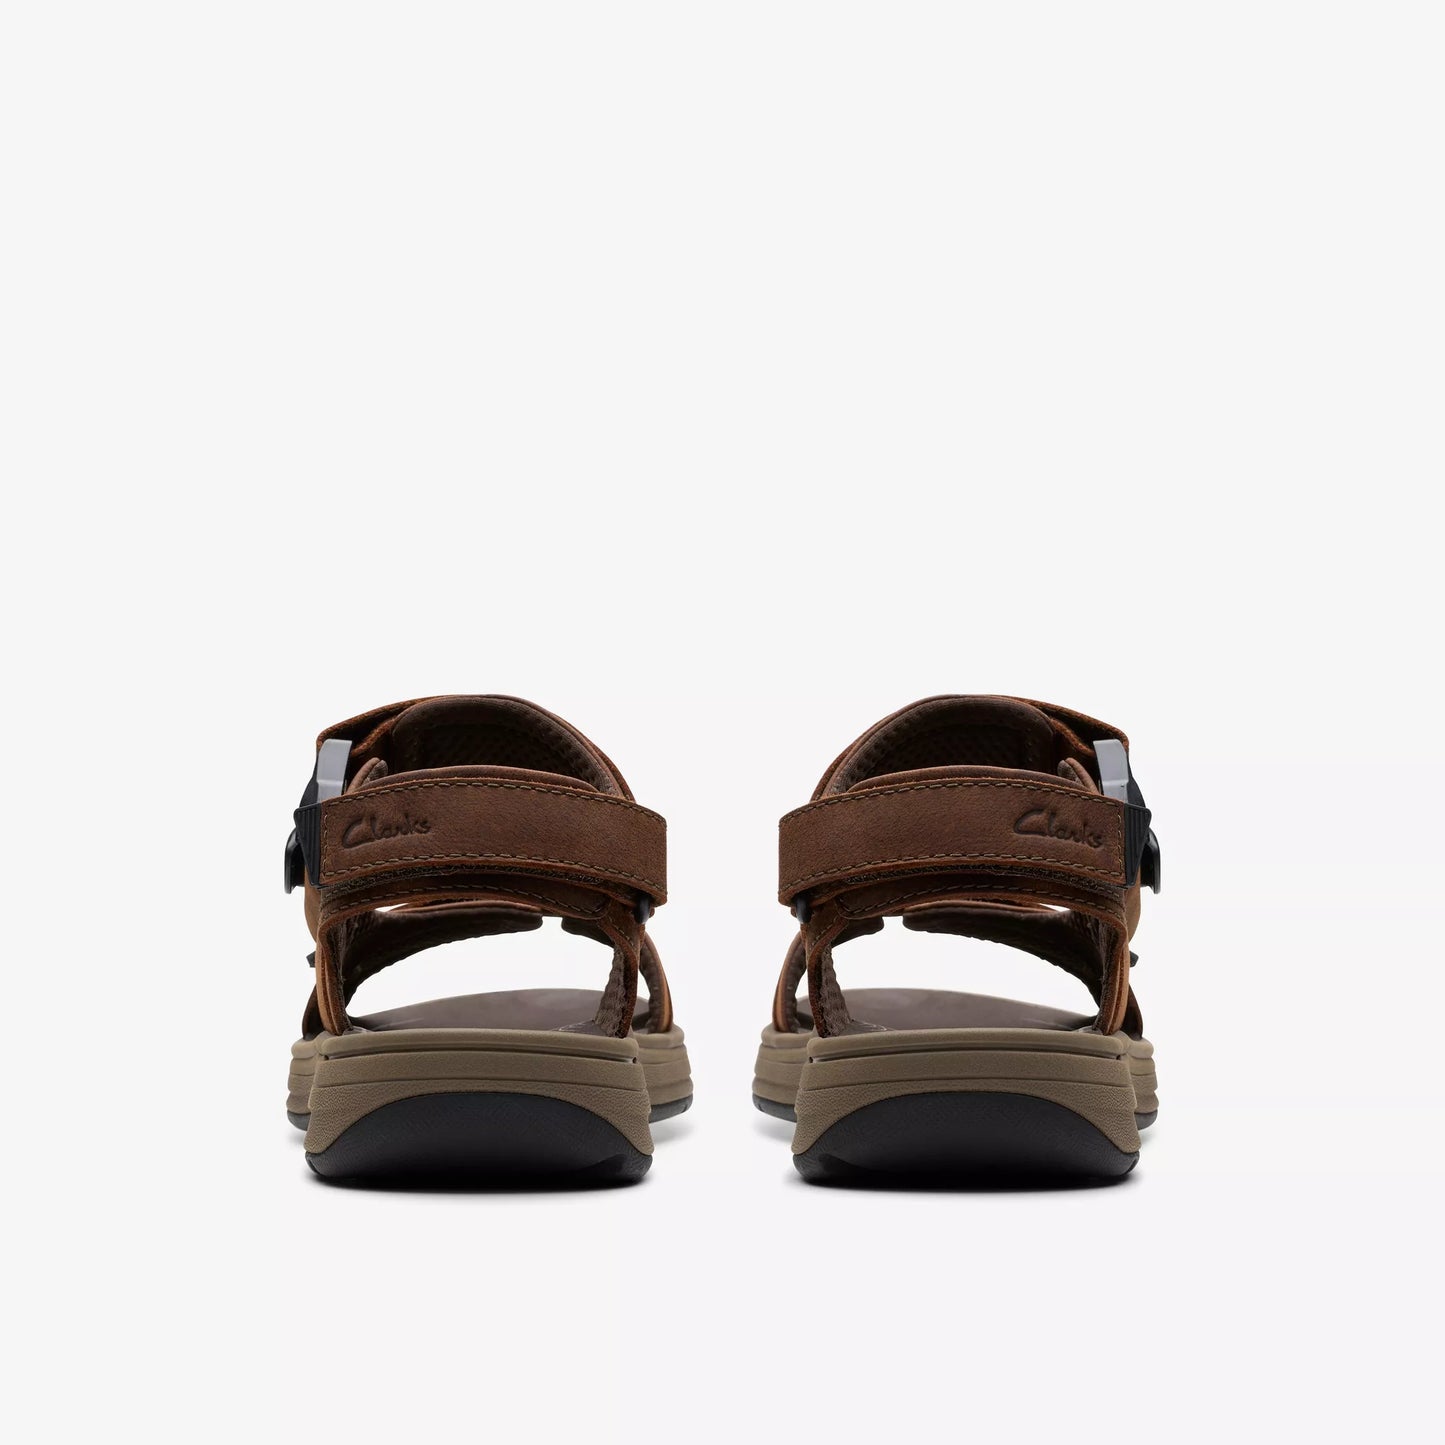 CLARKS | 男士休闲凉鞋 | SALTWAY TRAIL DARK BROWN LEA | 棕色的